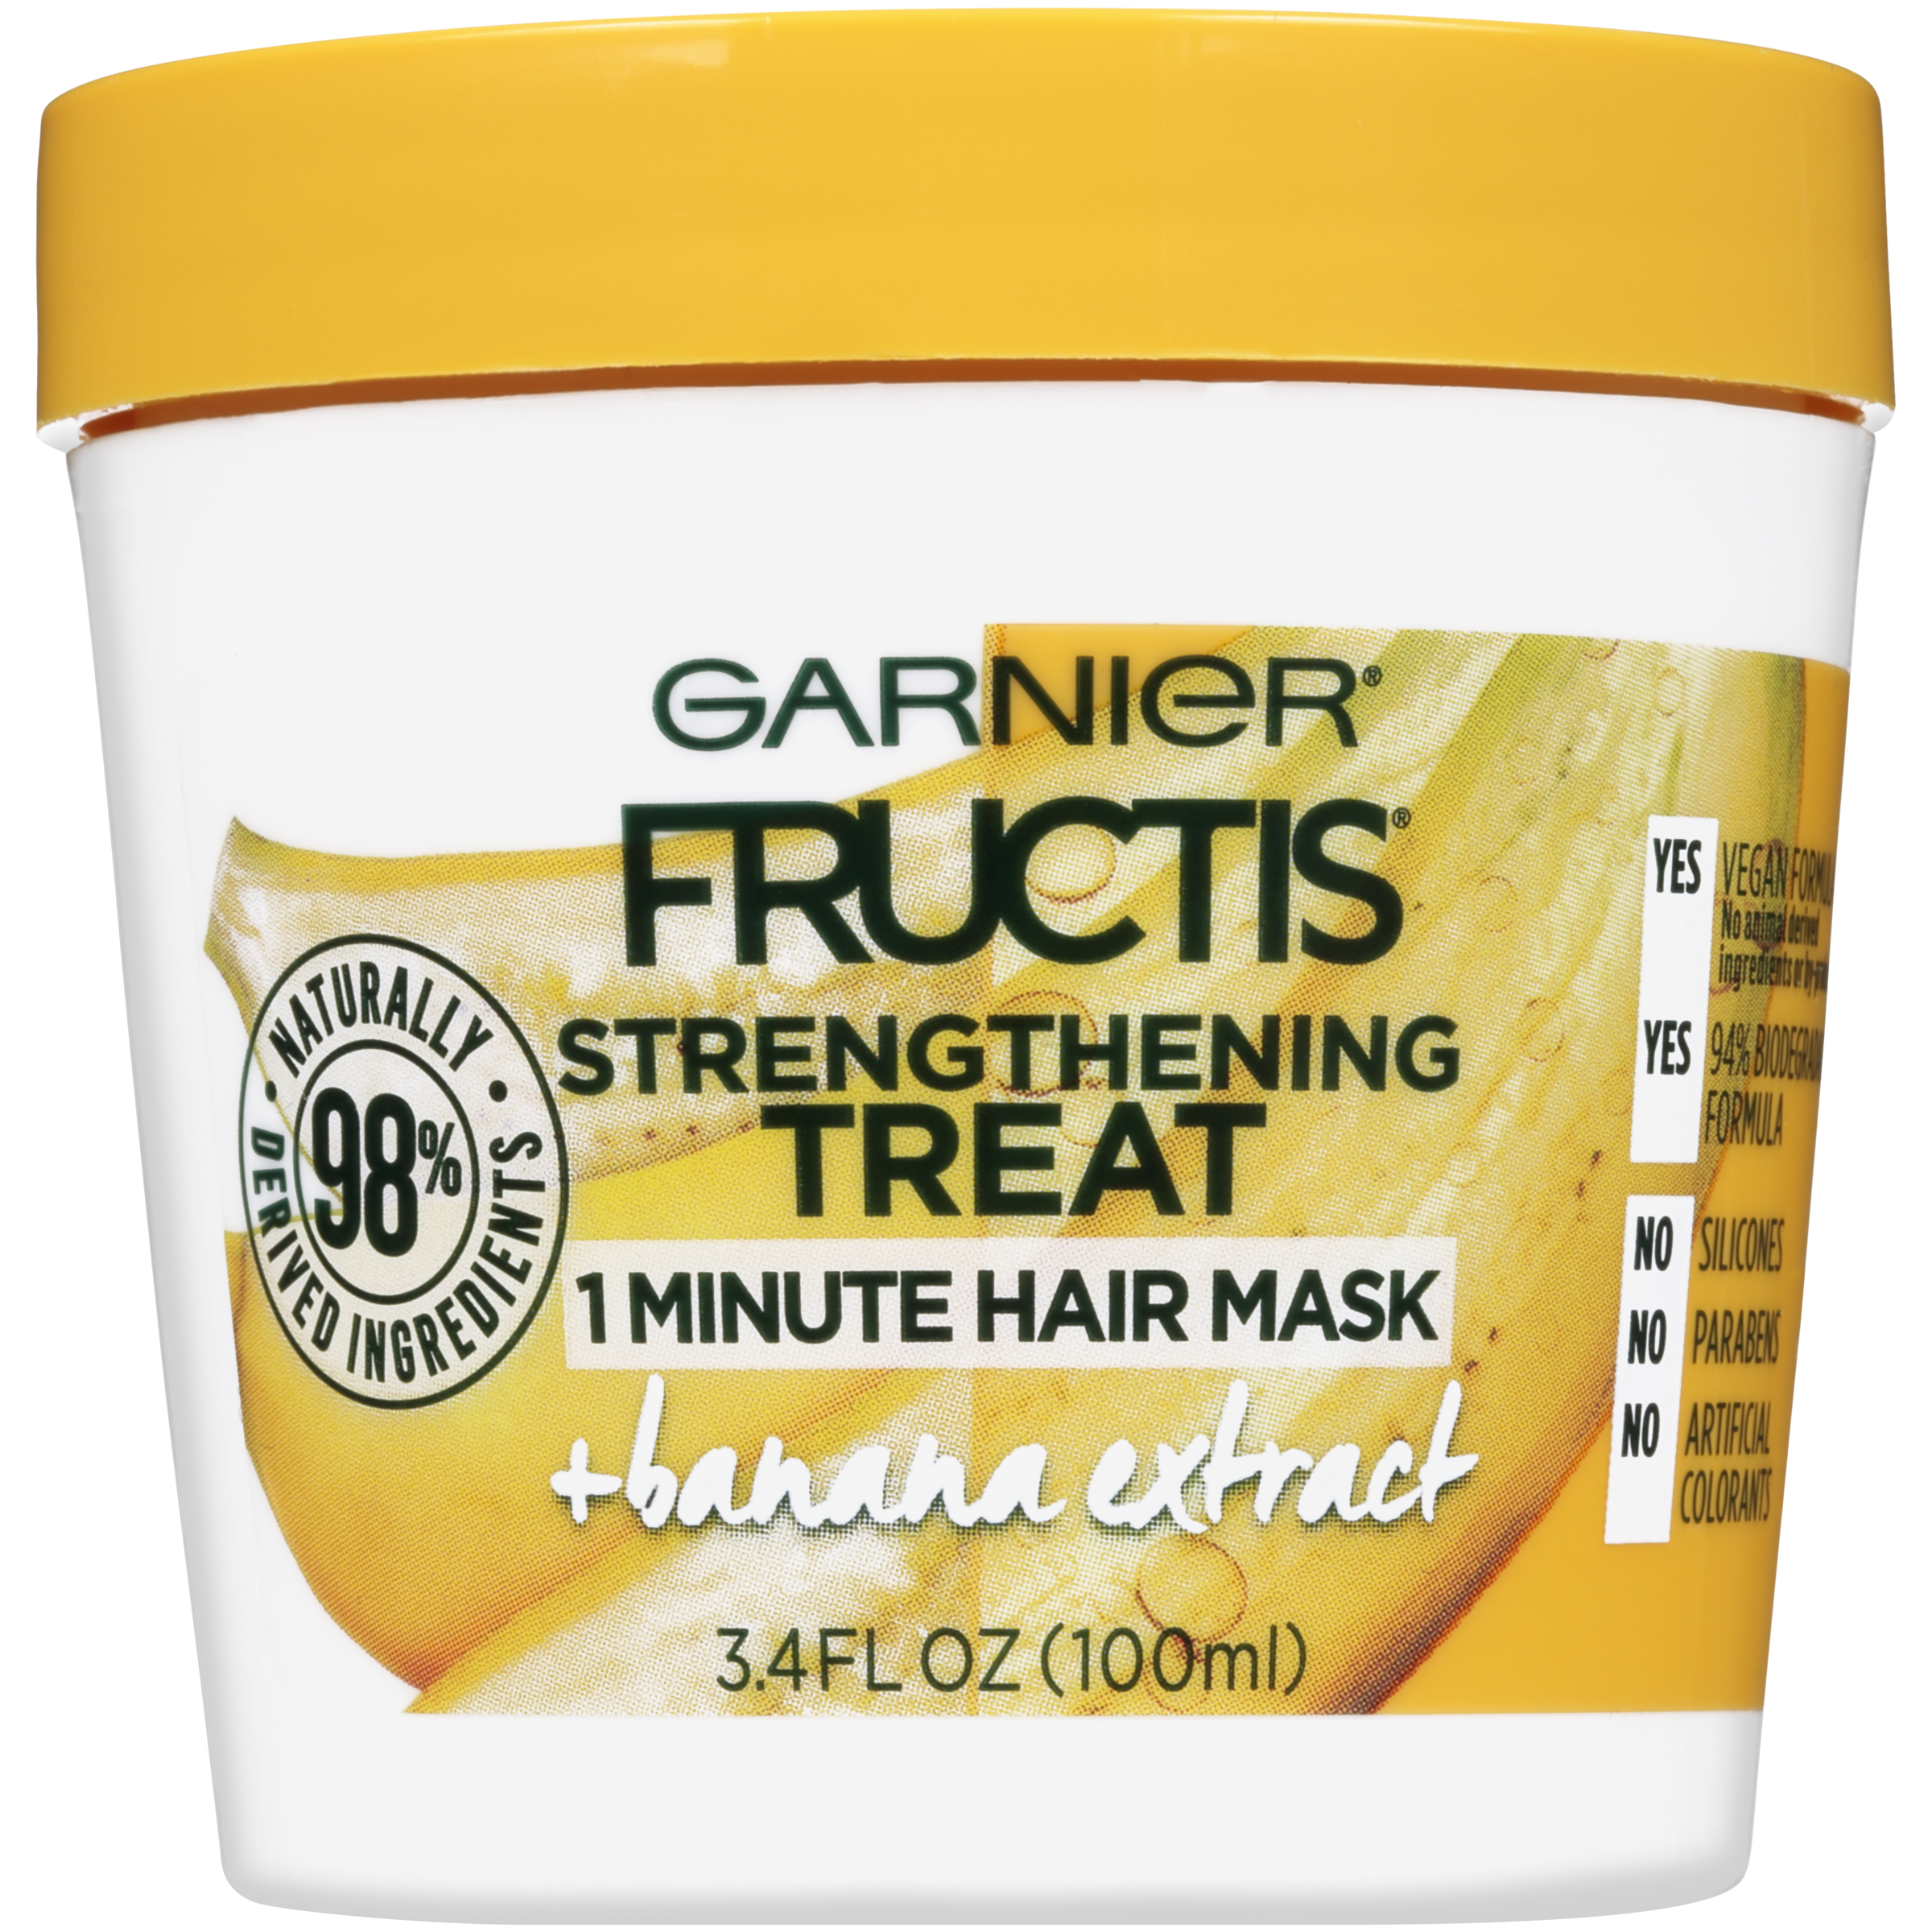 Garnier Fructis Strengthening Treat 1 Minute Hair Mask with Banana Extract, 3.4 fl. oz.